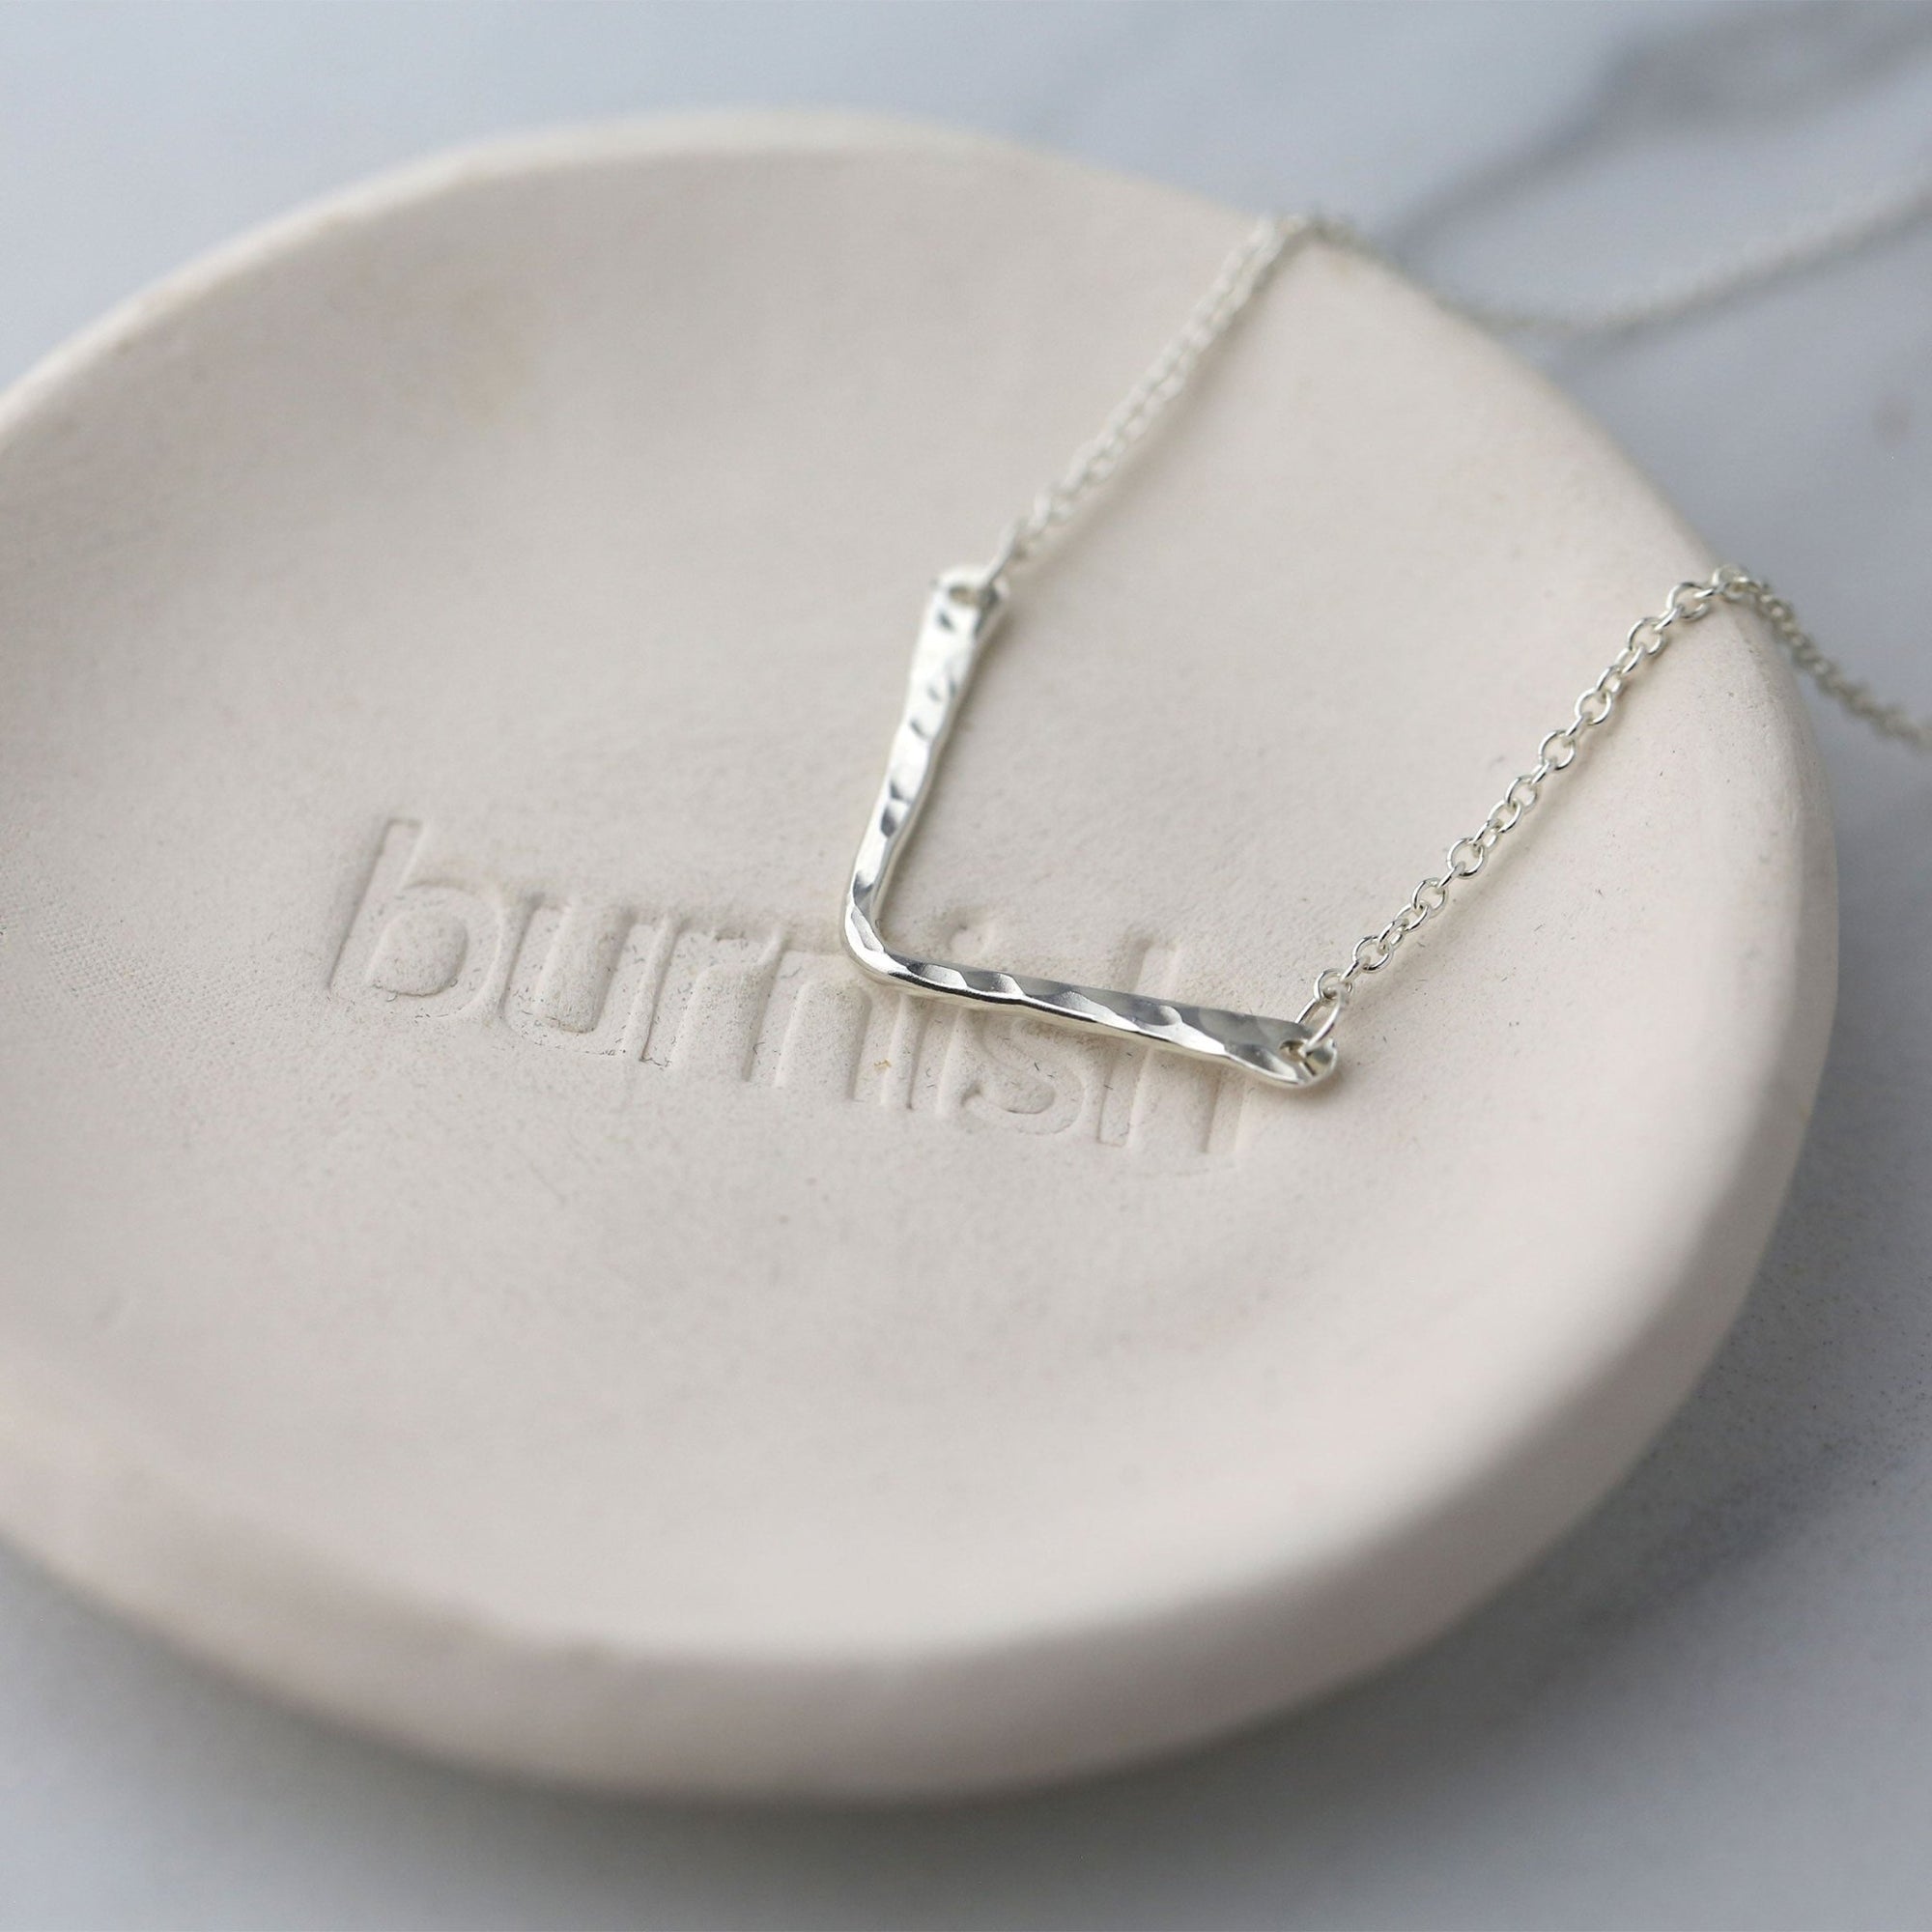 Hammered Chevron Necklace handmade by Burnish